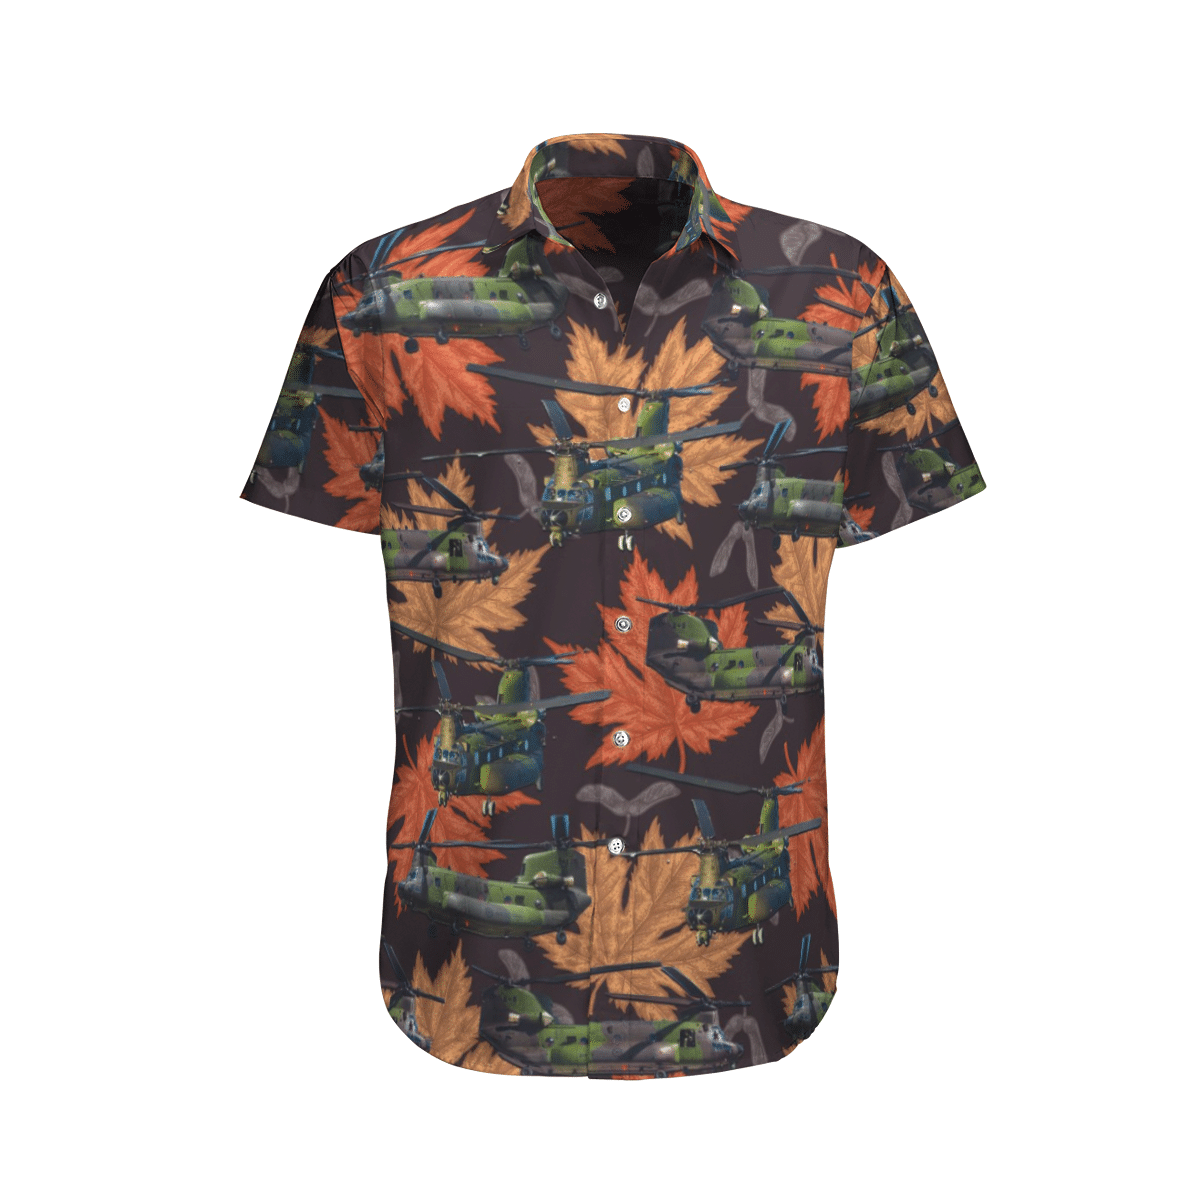 Get a new Hawaiian shirt to enjoy summer vacation 111